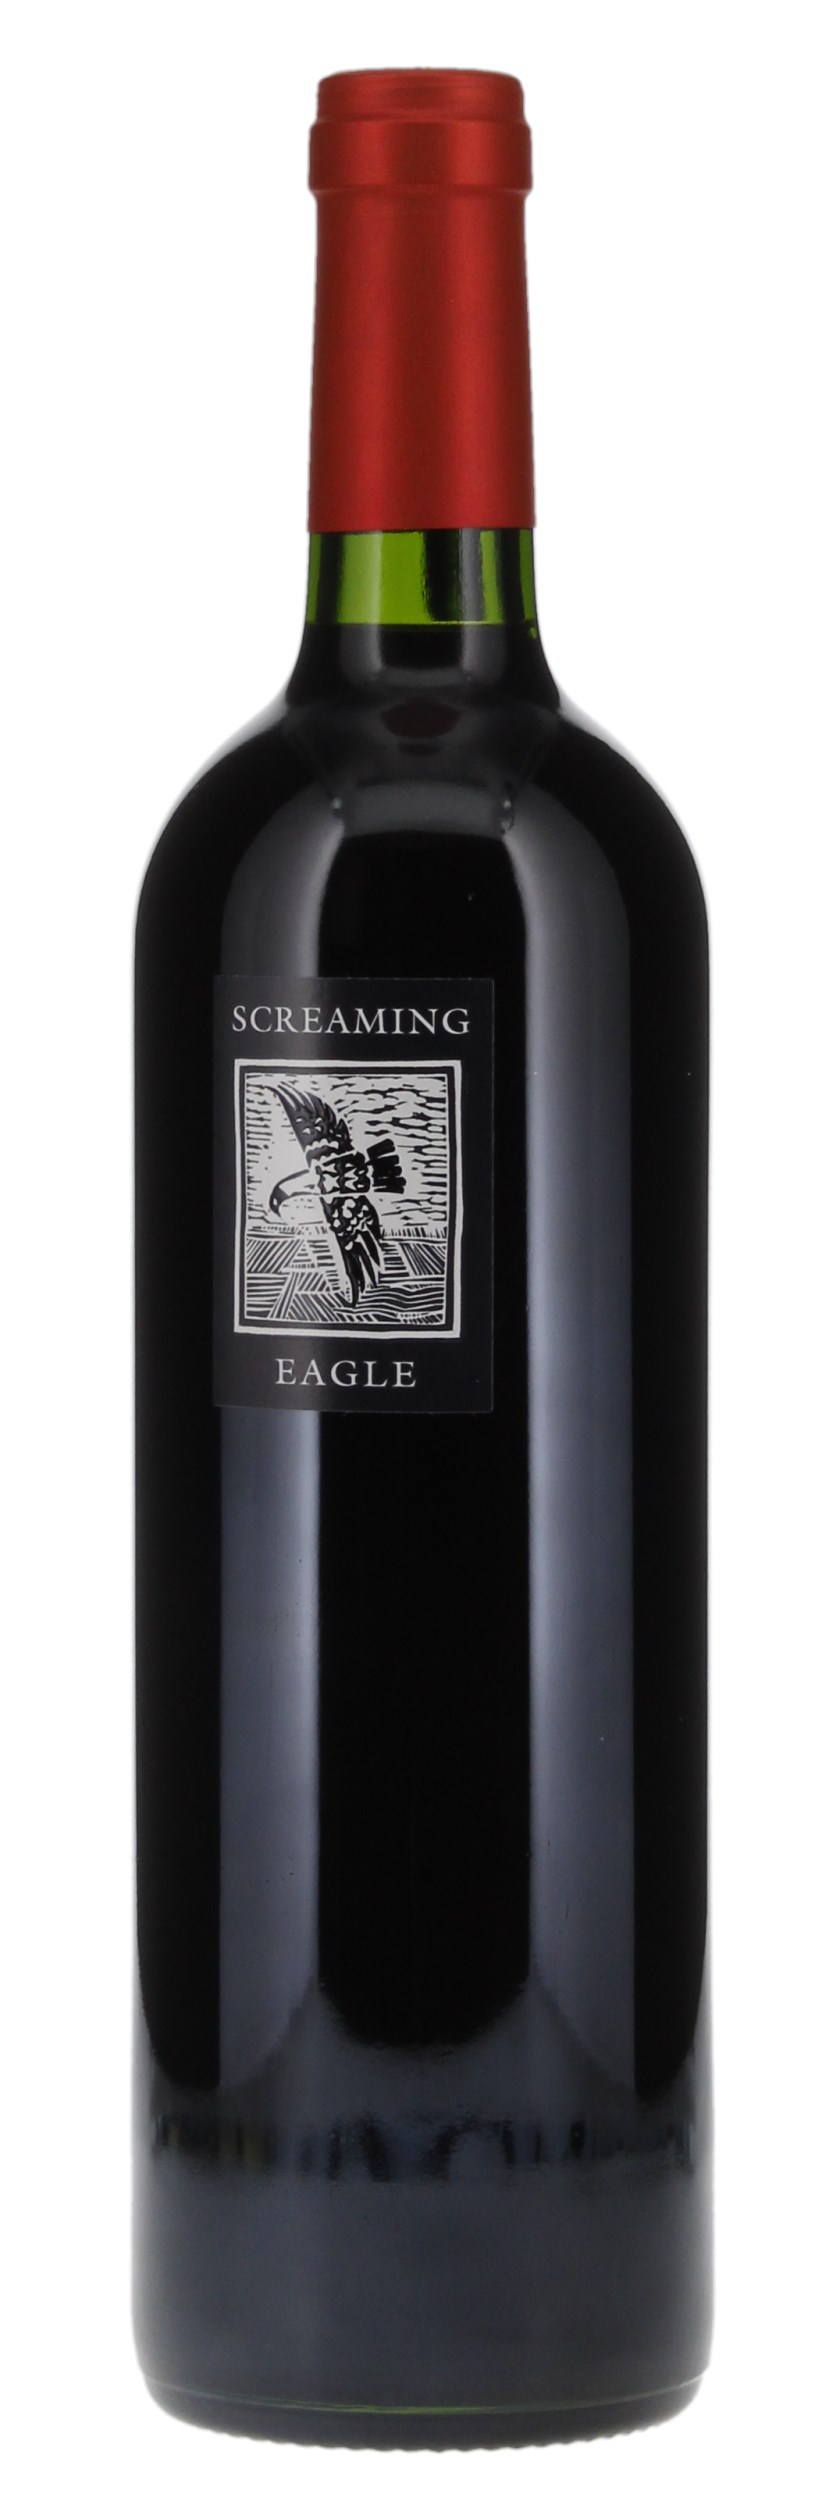 2010 Screaming Eagle Cabernet Sauvignon, 750ml